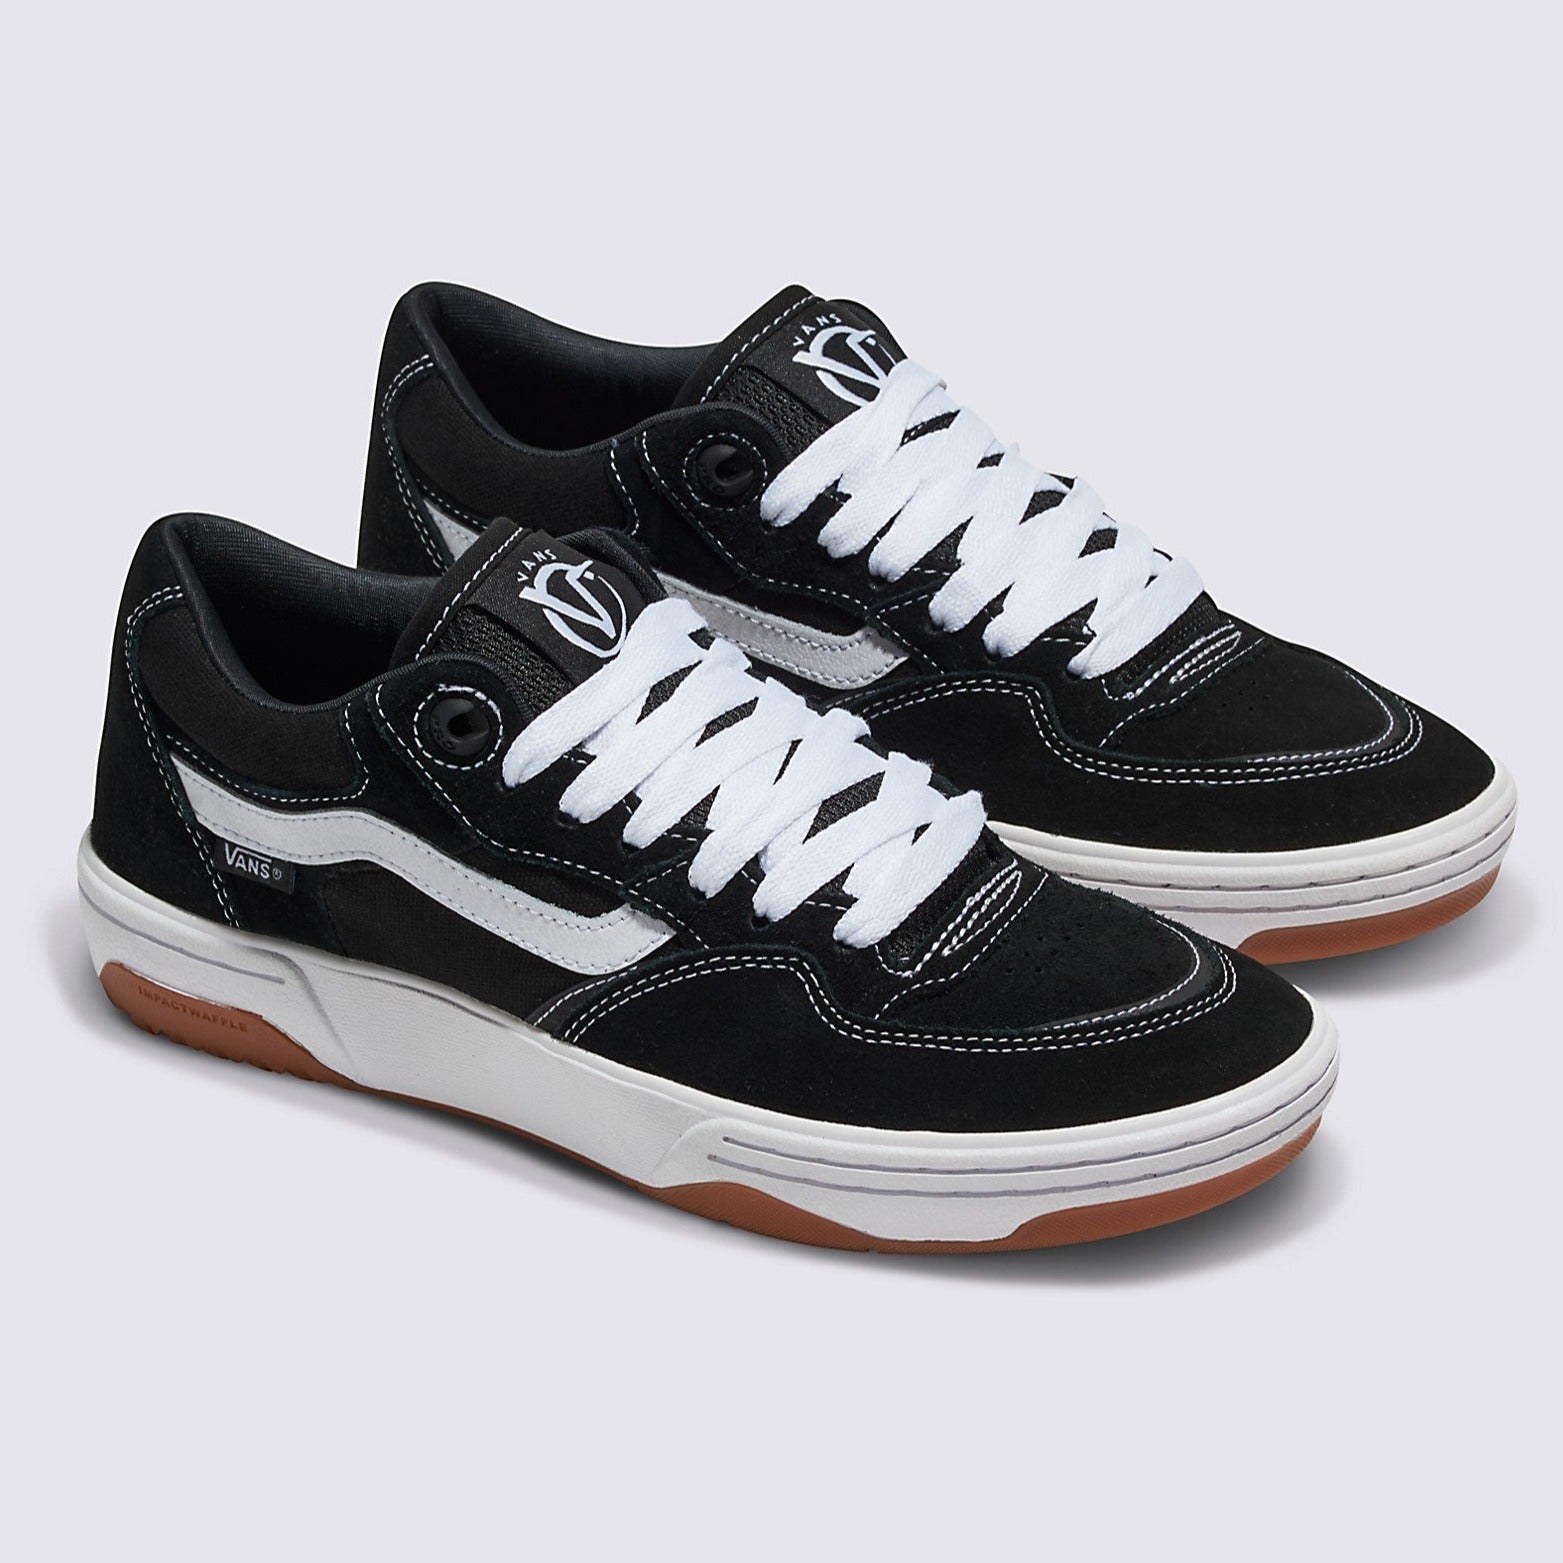 Black/White Rowan 2 Vans Skate Shoe